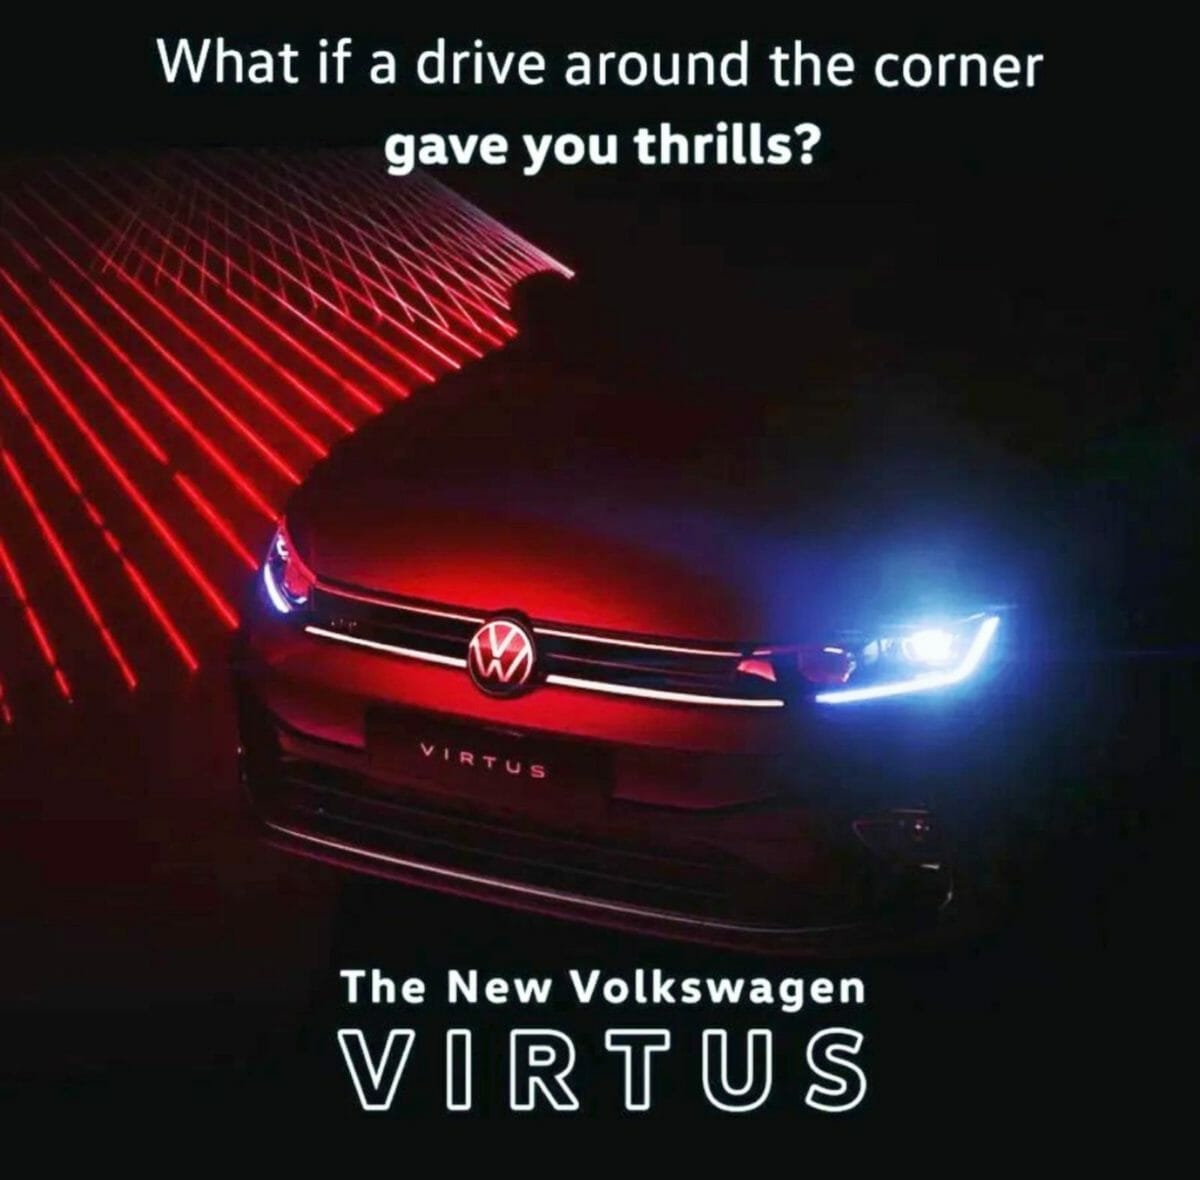 Volkswagen Virtus front fascia teased